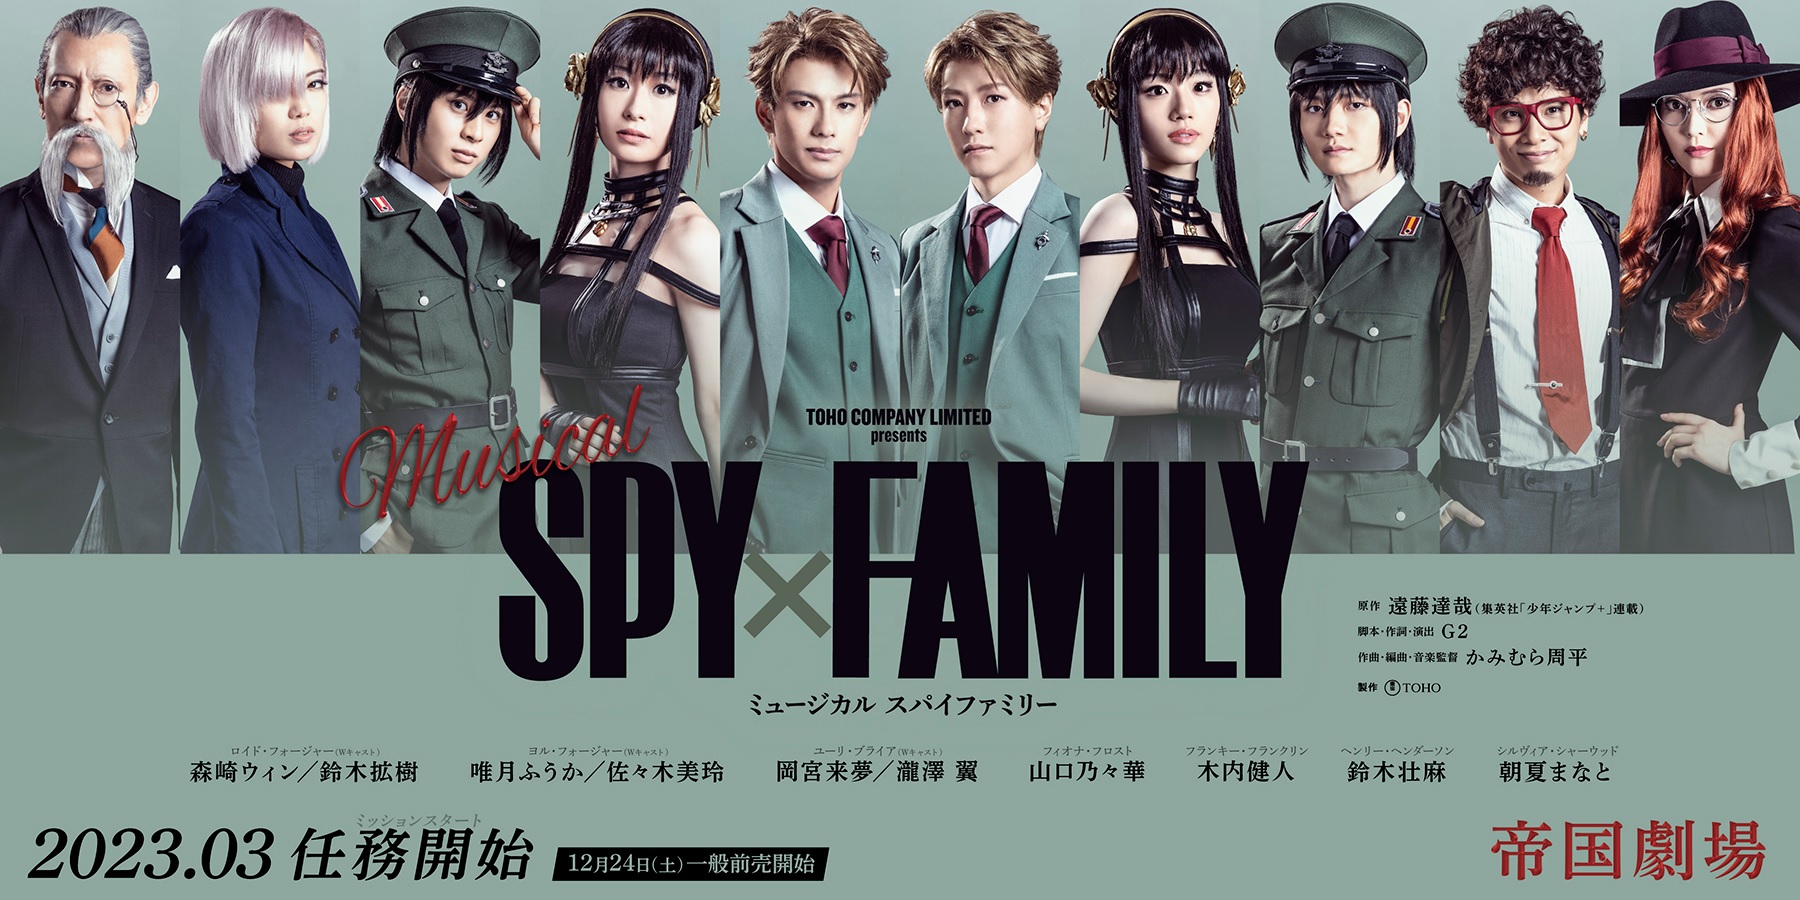 Spy x Family Season 2 Trailer Previews Loid and Yor Date, Theme Songs